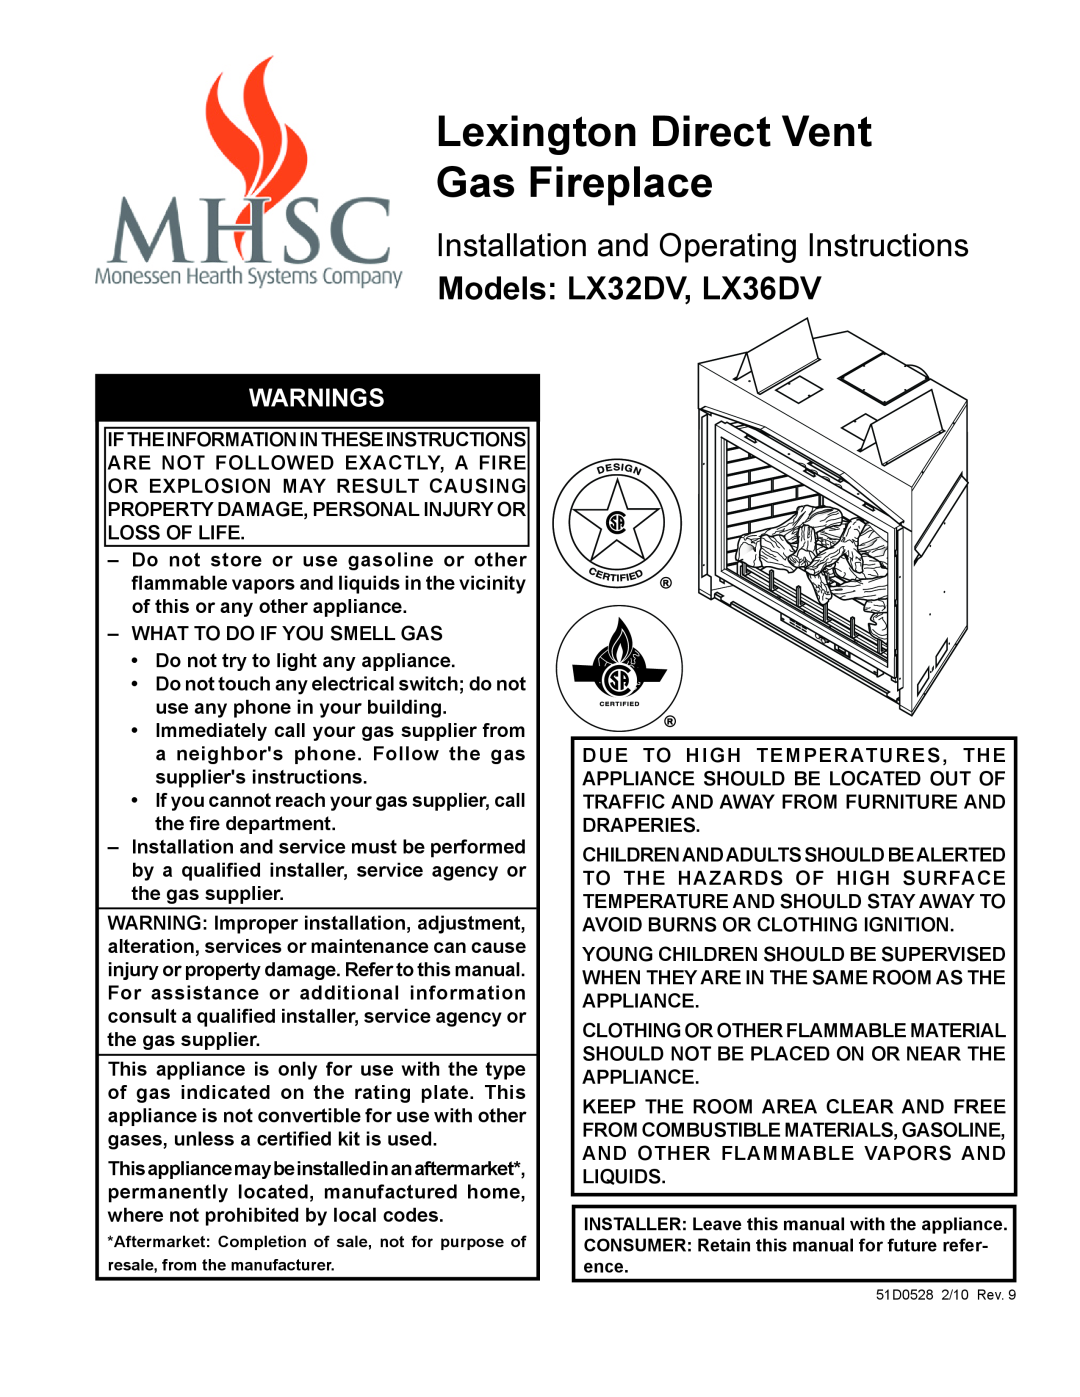 Monessen Hearth operating instructions Models LX32DV, LX36DV, Lexington Direct Vent Gas Fireplace, Warnings 